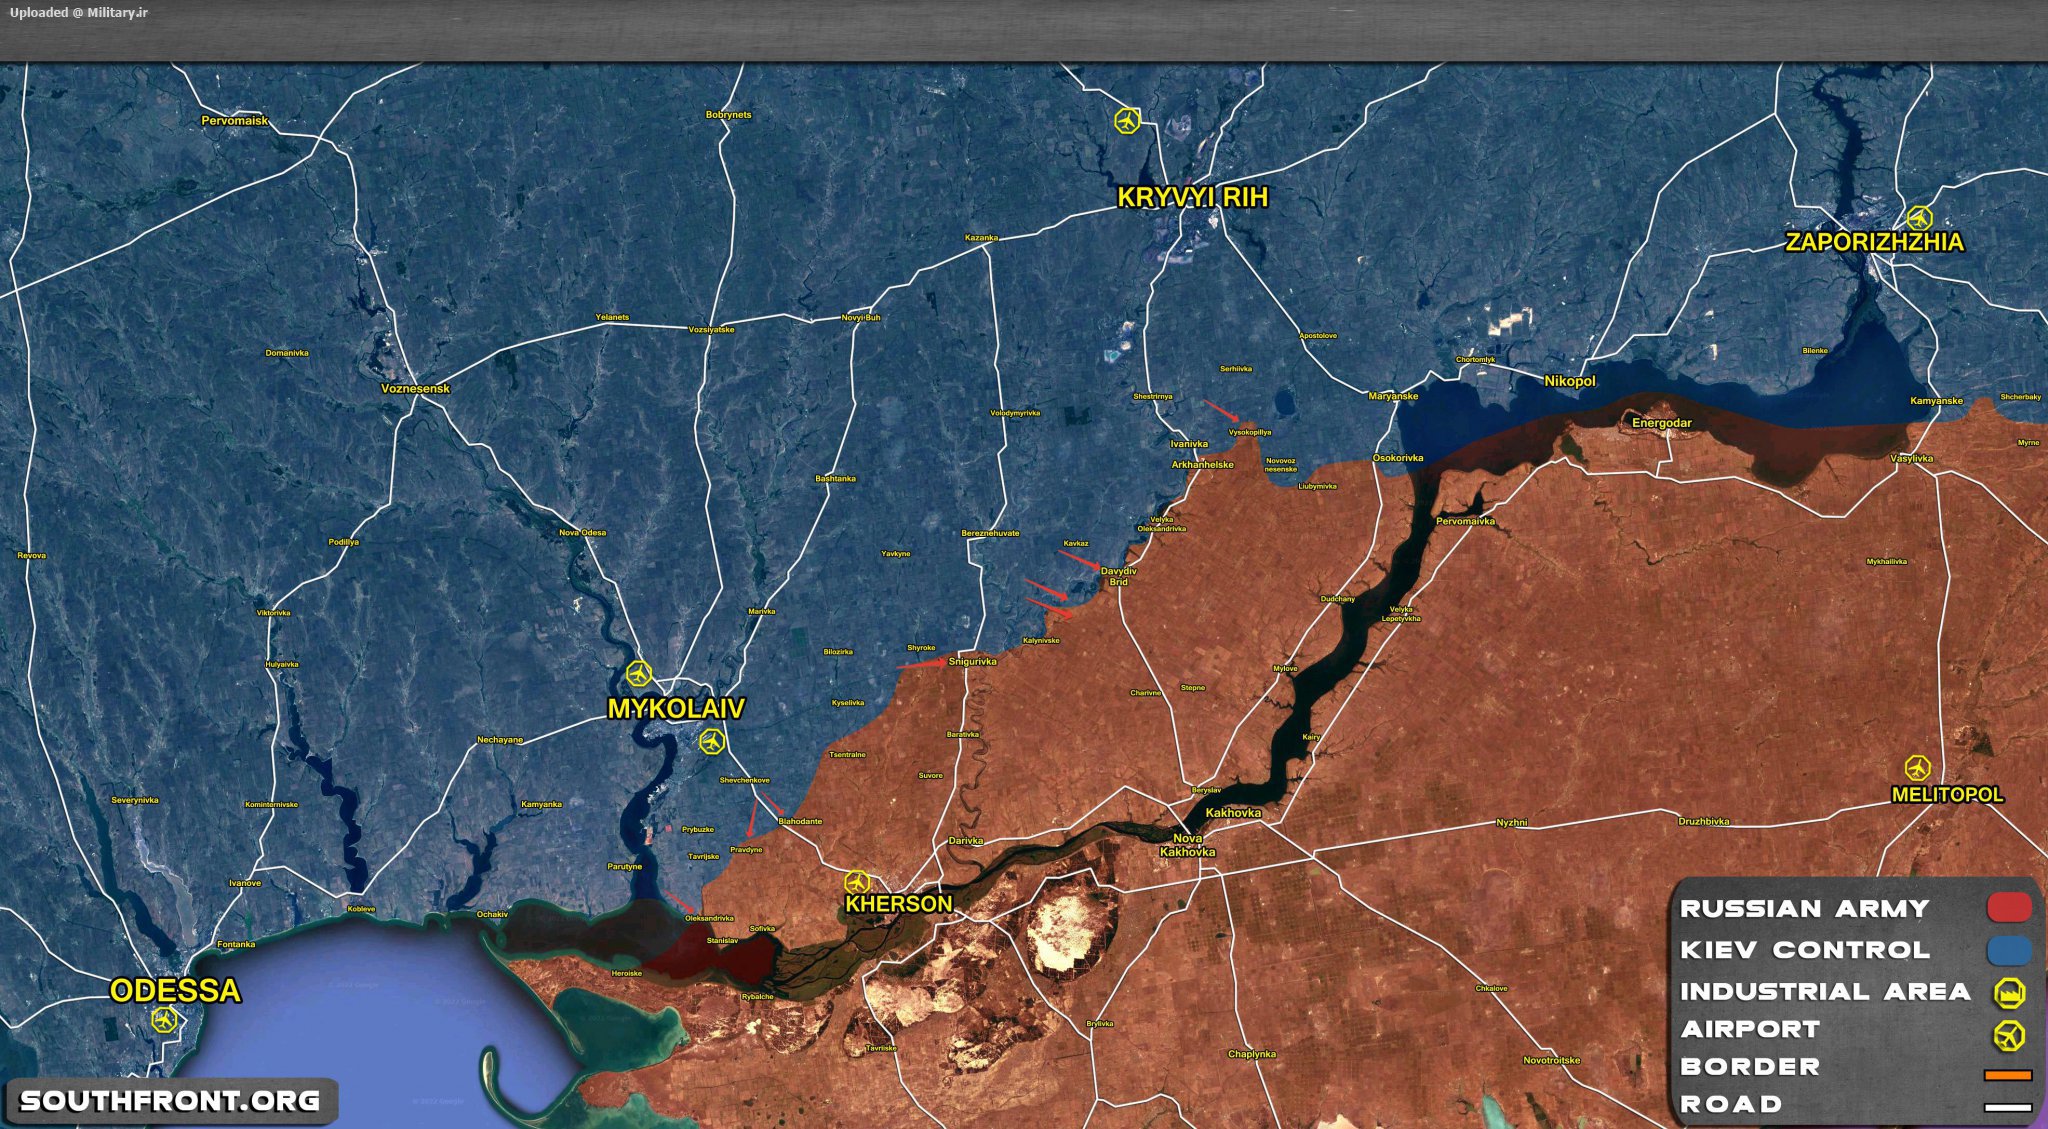 Ukraine_Odessa_KryvyiRih_Map_2022.jpg